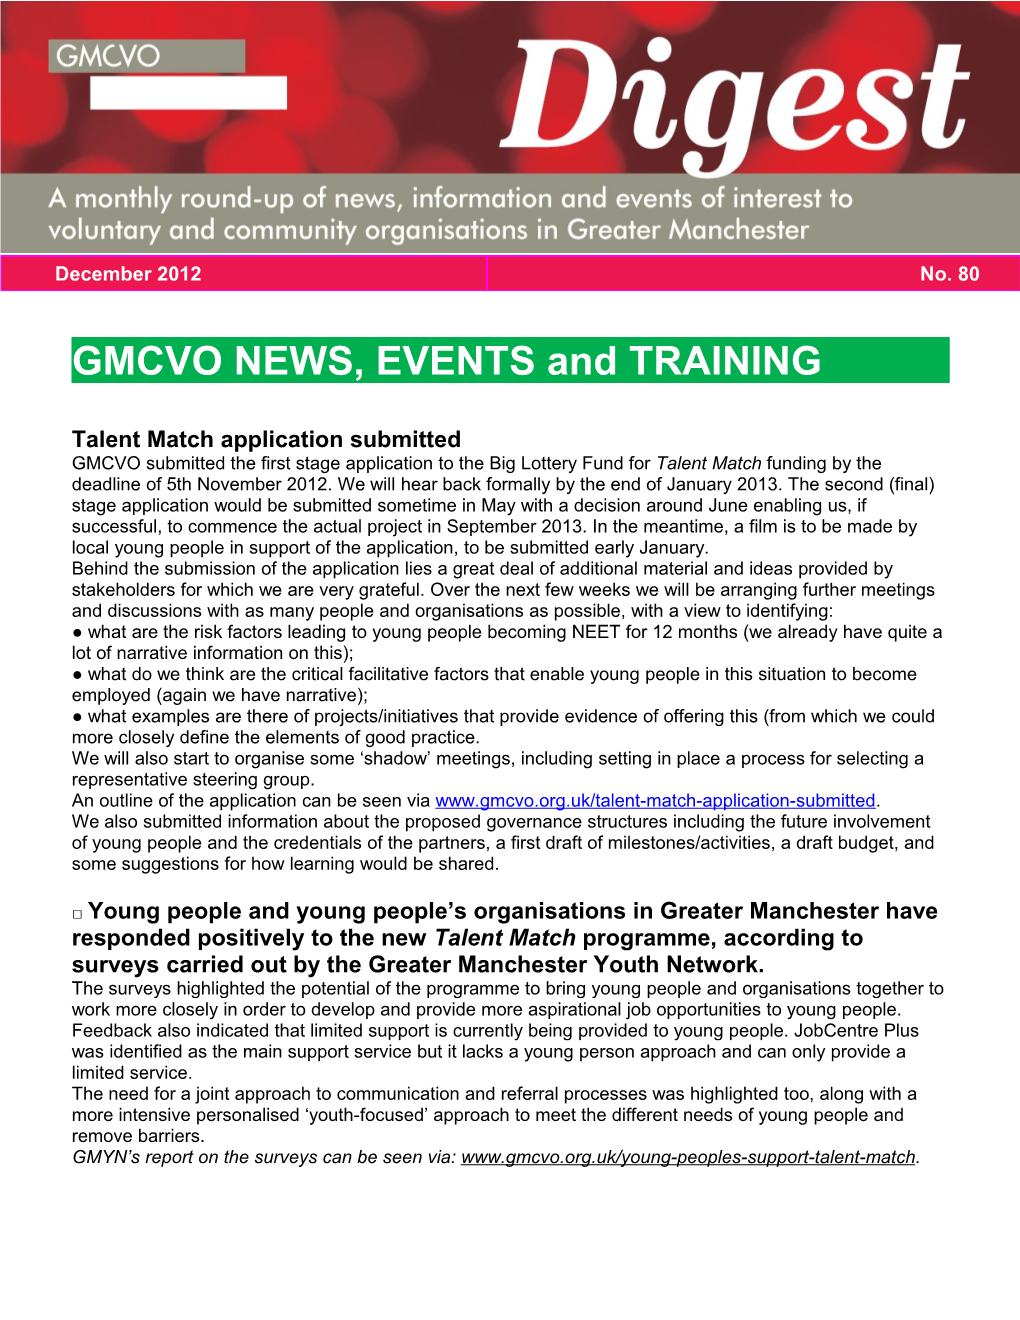 GMCVO NEWS, EVENTS and TRAINING